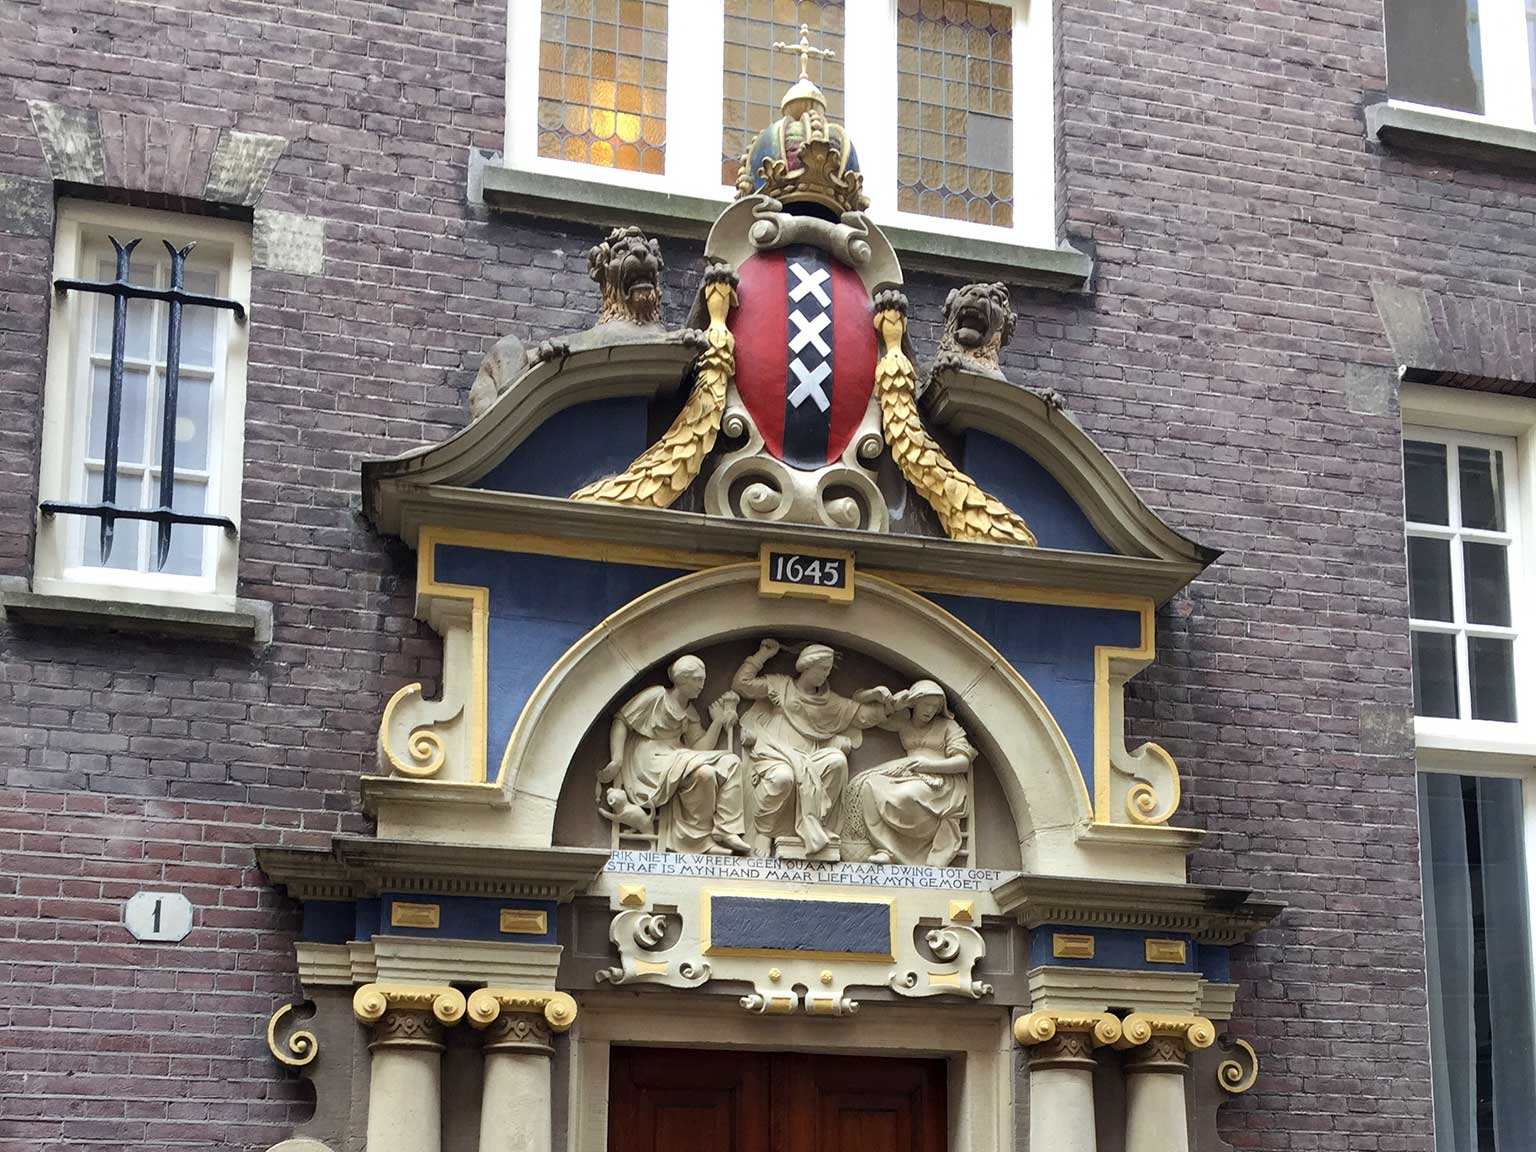 De keizerskroon boven het Amsterdamse wapen in de Spinhuissteeg, Amsterdam